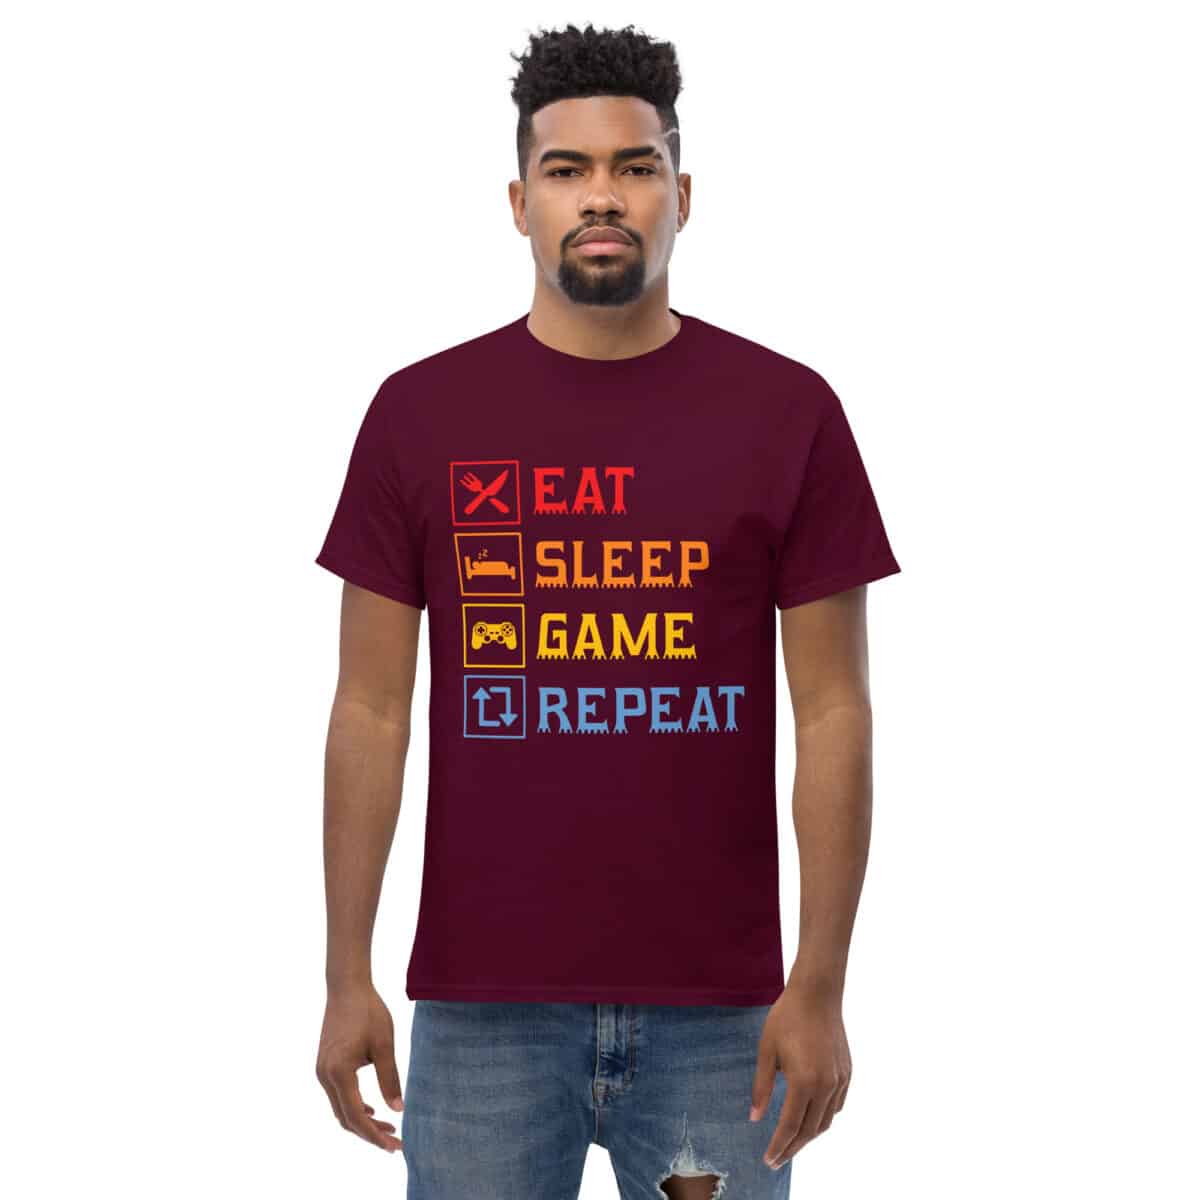 Eat Sleep Game Repeat Shirt For Men